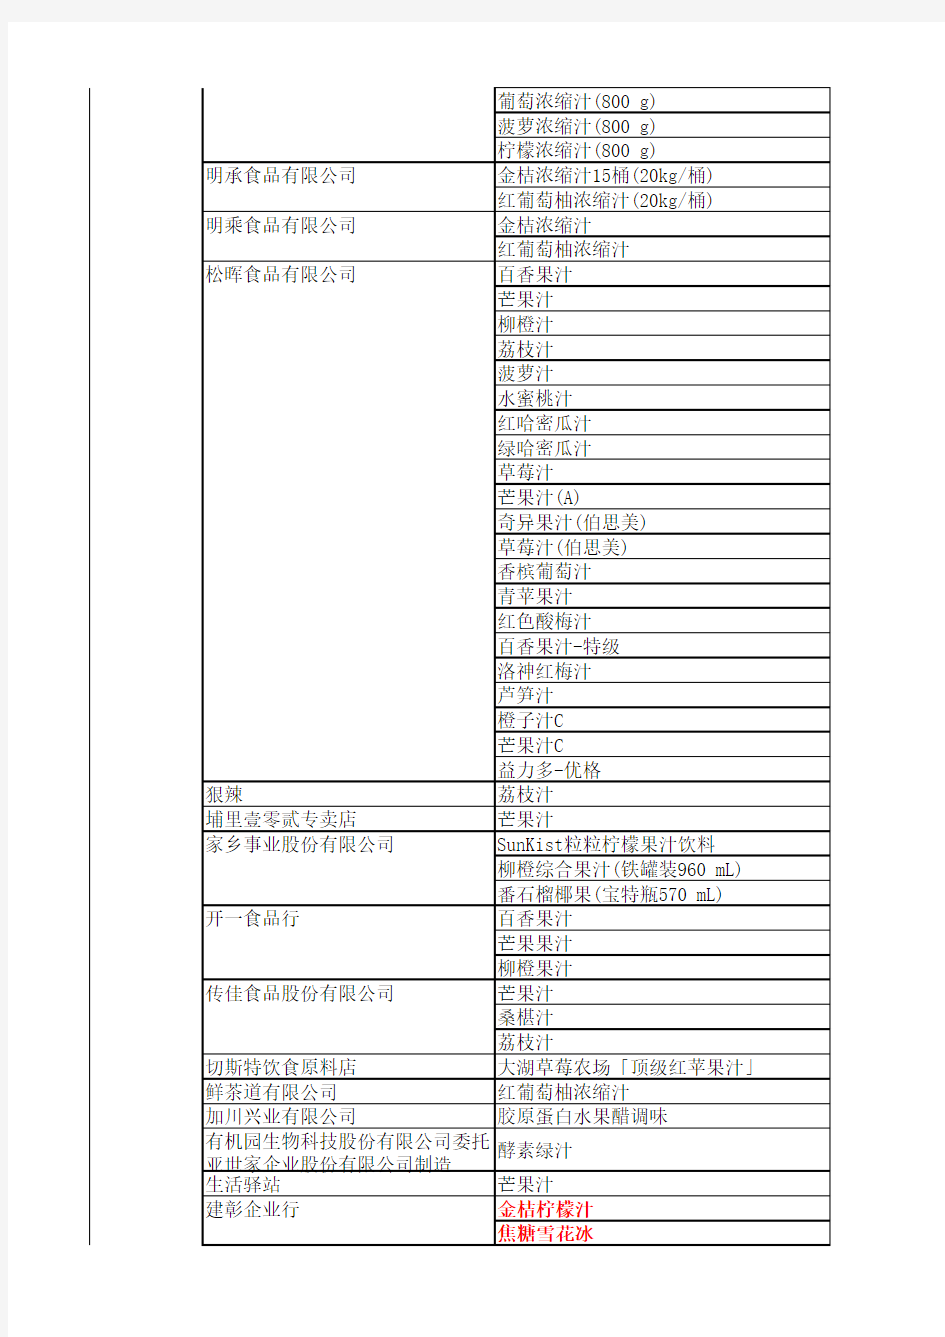 AQSIQ台湾地区公布的受塑化剂污染的问题企业及其+相关产品名单(2011年6月7日更新)